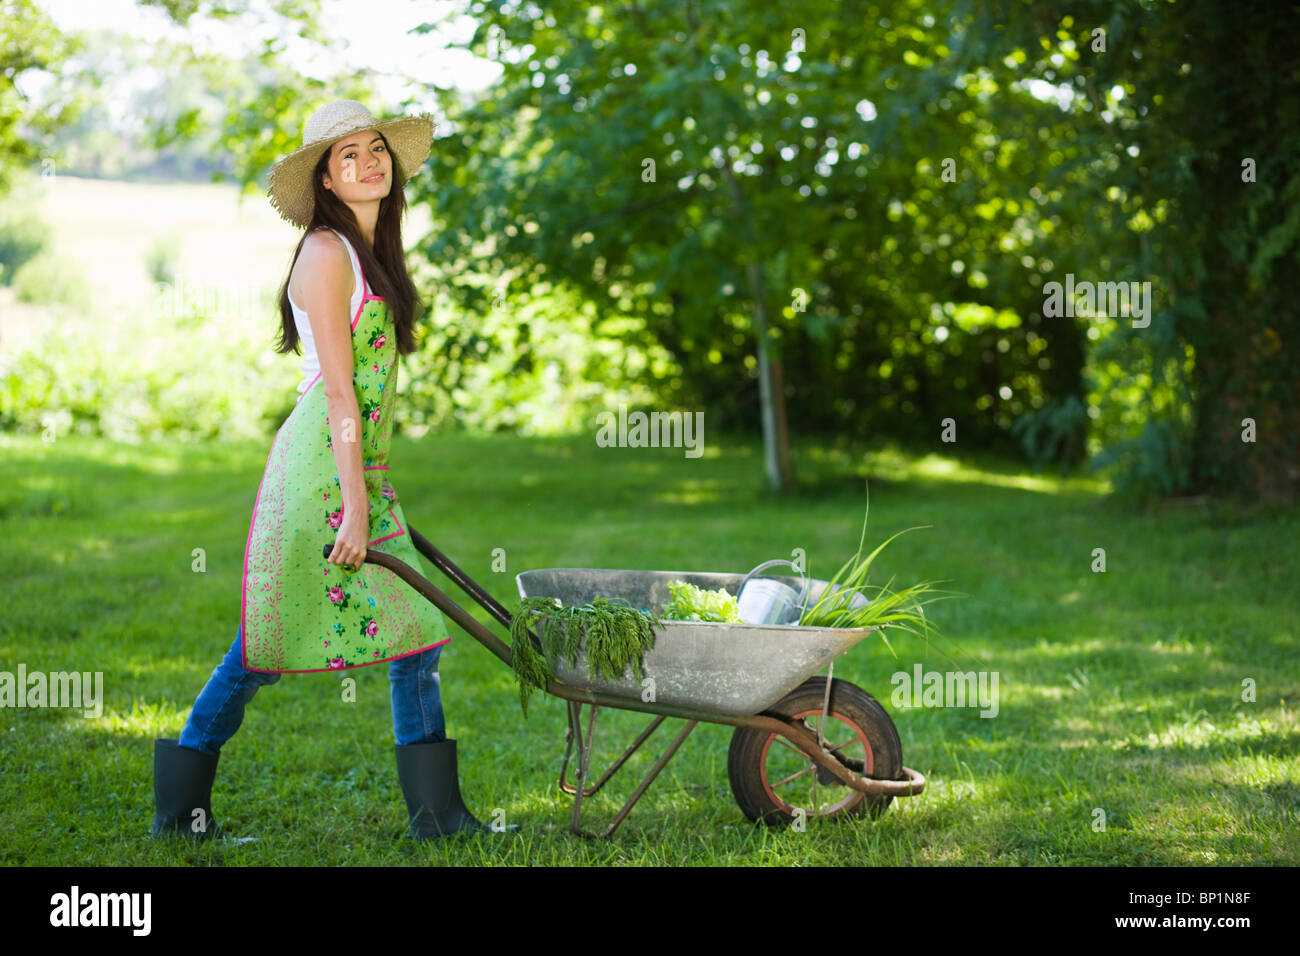 Young woman pushing wheelbarrow Stock Photo